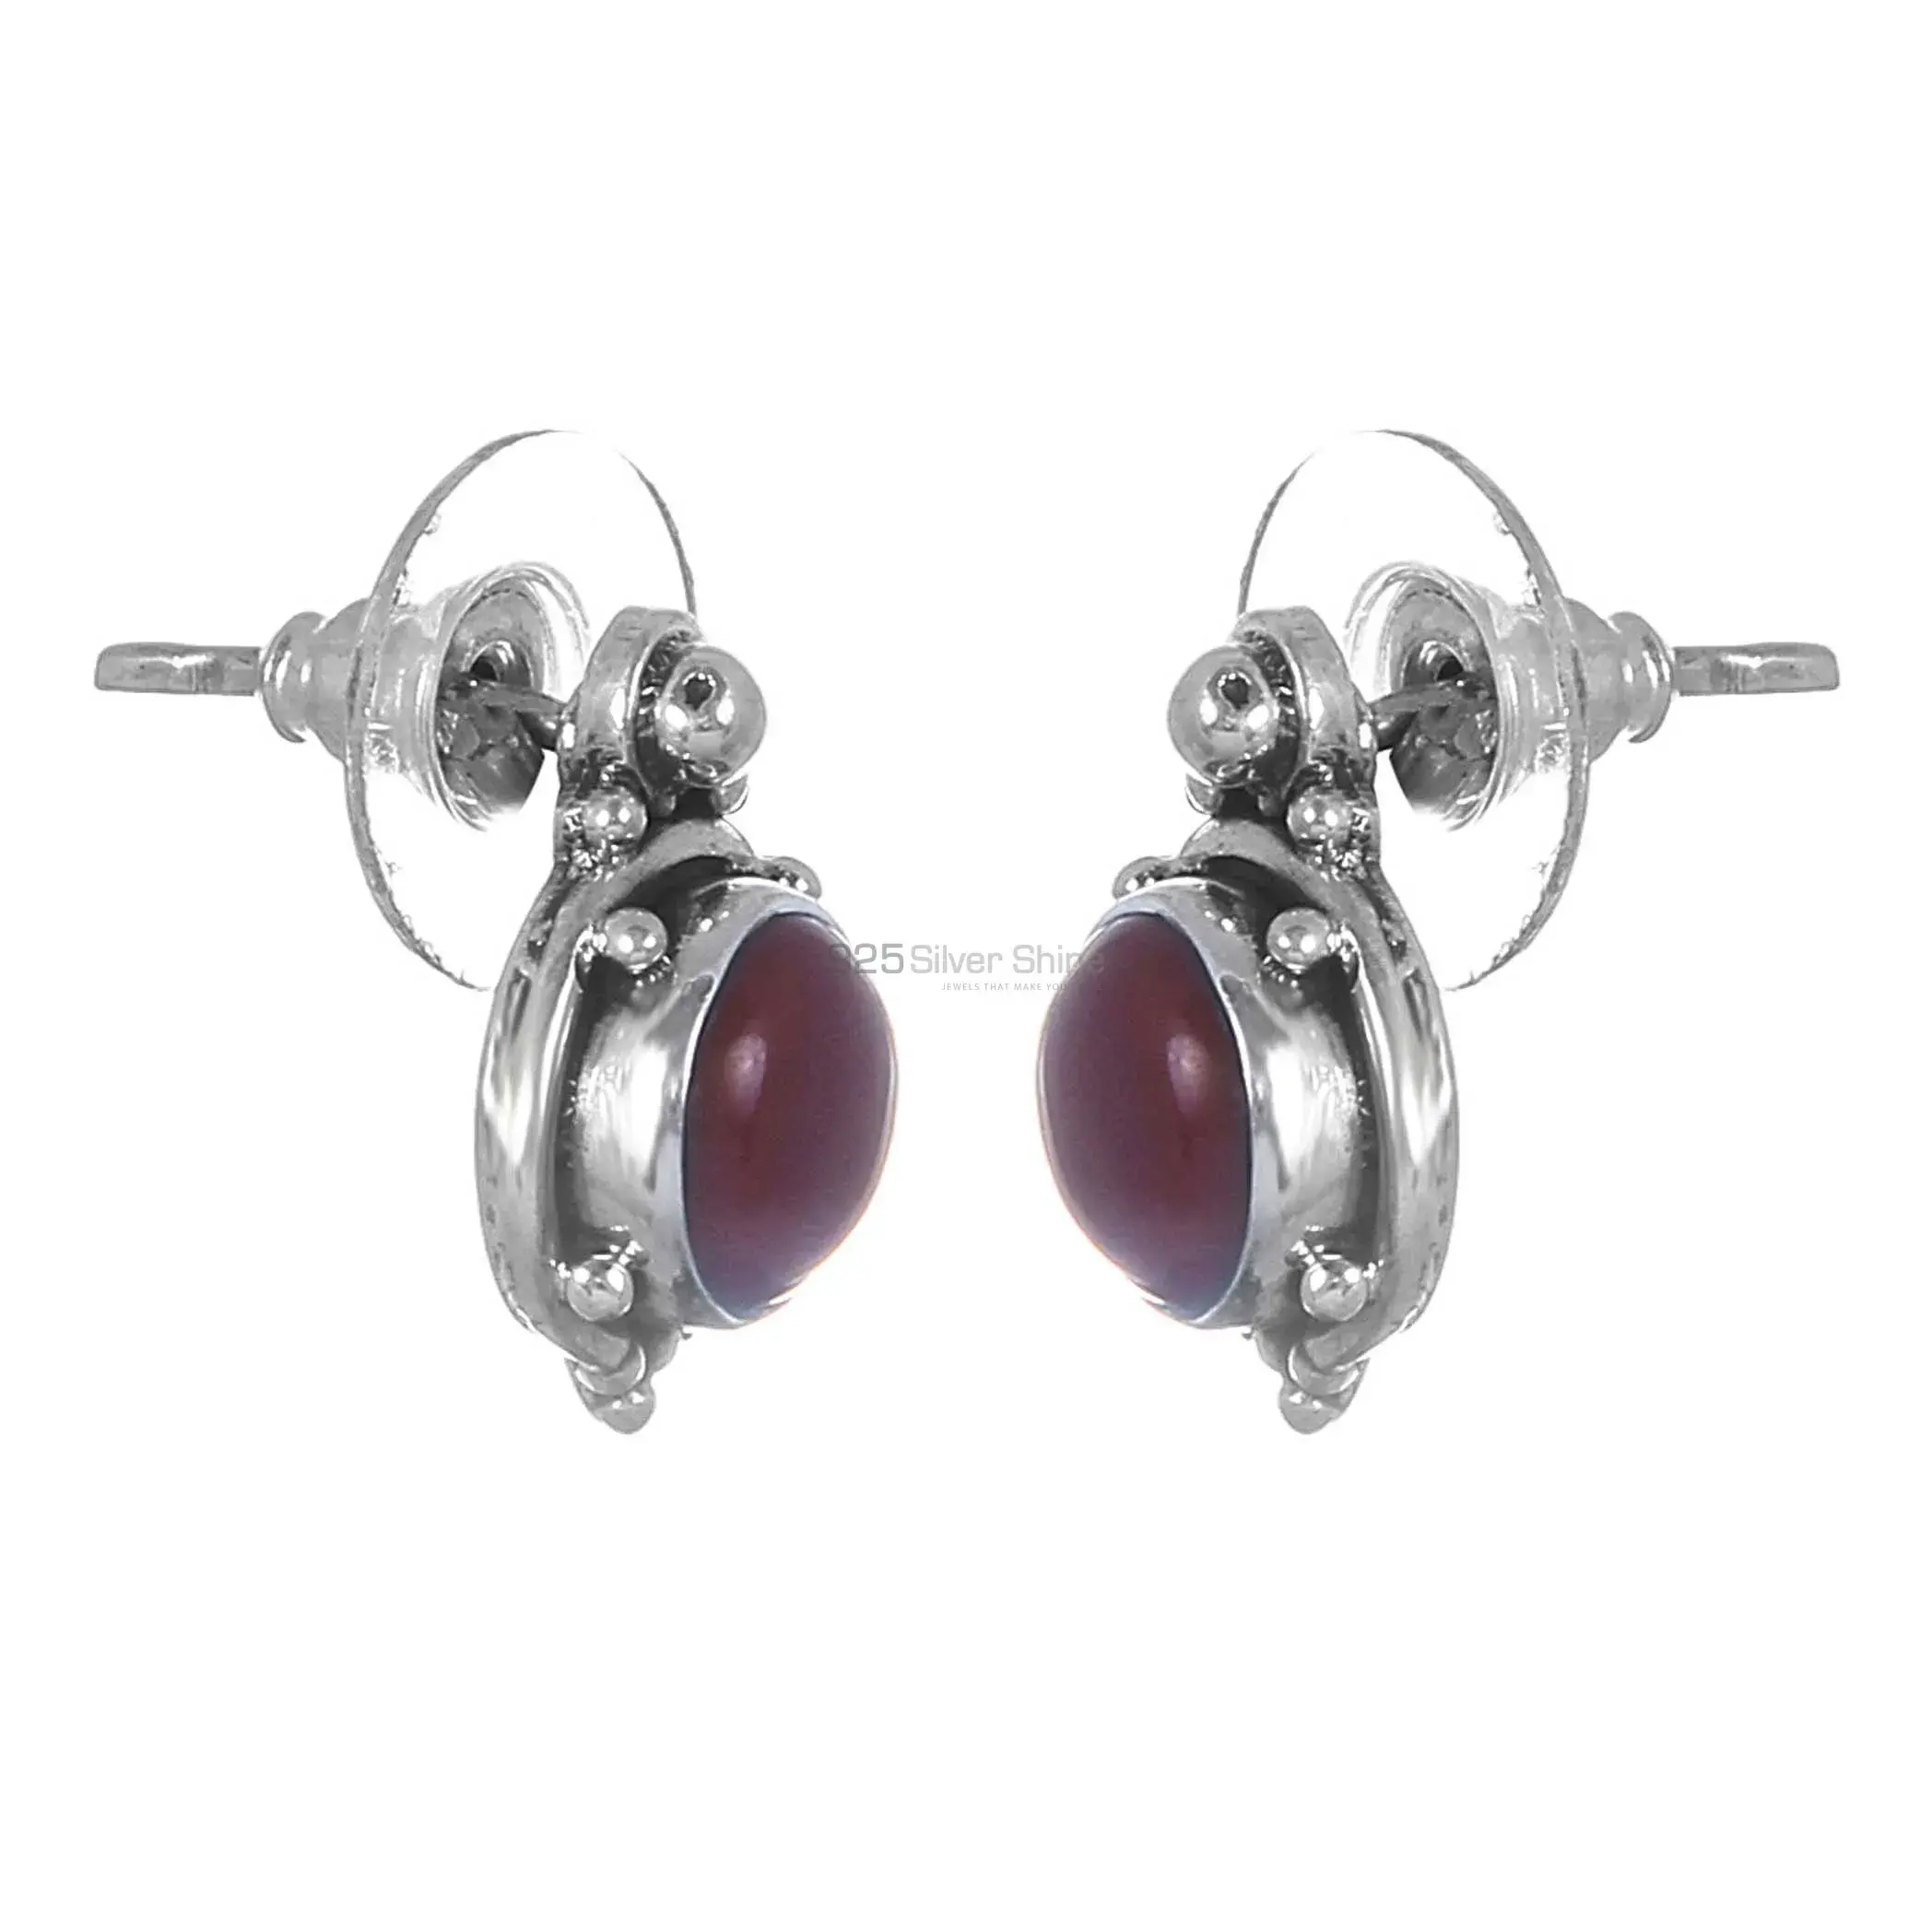 Unique 925 Sterling Silver Earrings In Red Onyx Gemstone Jewelry 925SE275_0